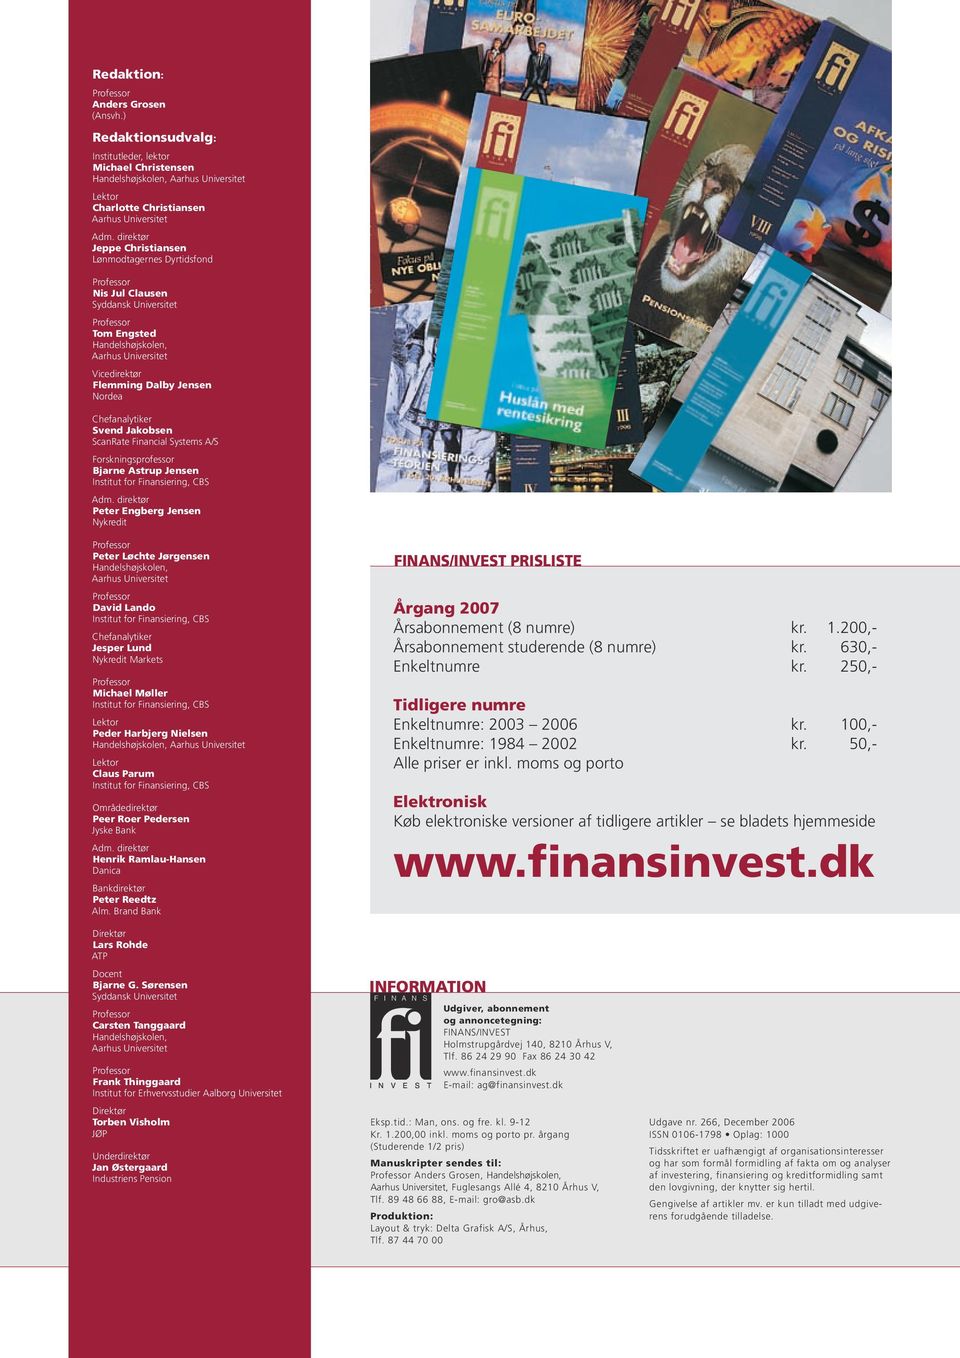 Svend Jakobsen ScanRate Financial Systems A/S Forskningsprofessor Bjarne Astrup Jensen Institut for Finansiering, CBS Adm.